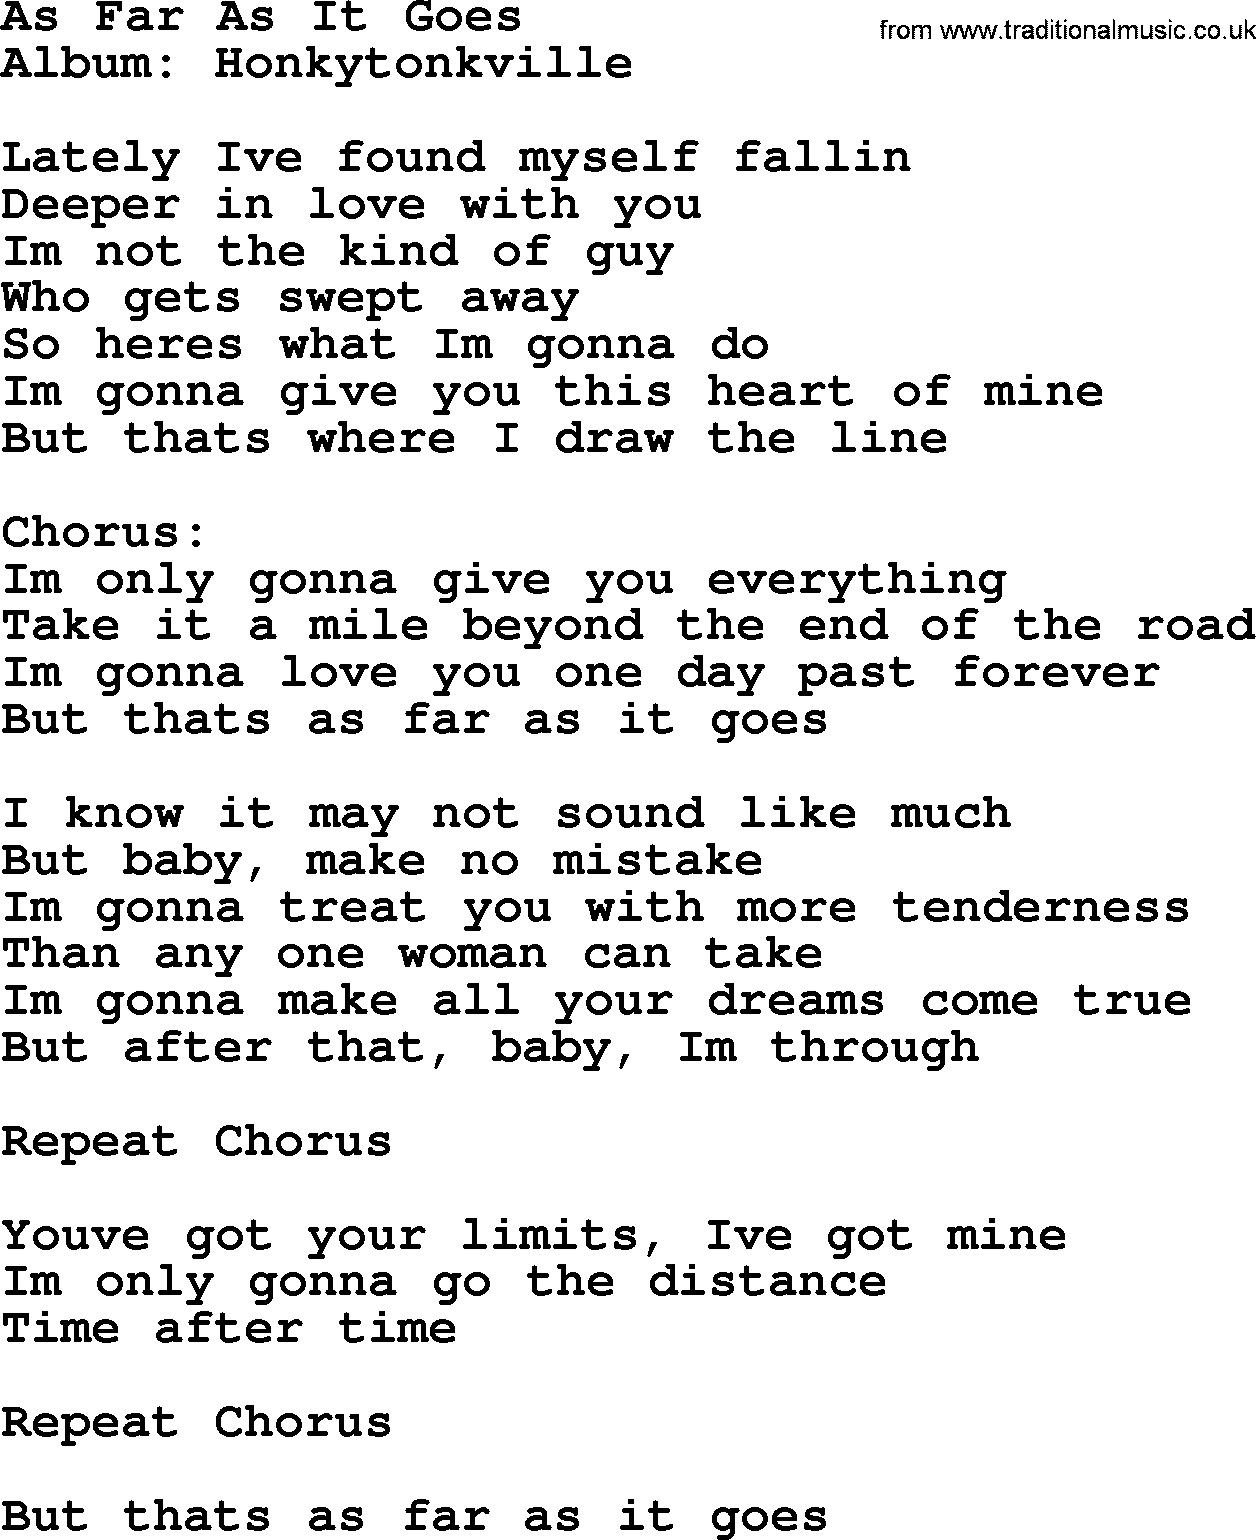 George Strait song: As Far As It Goes, lyrics